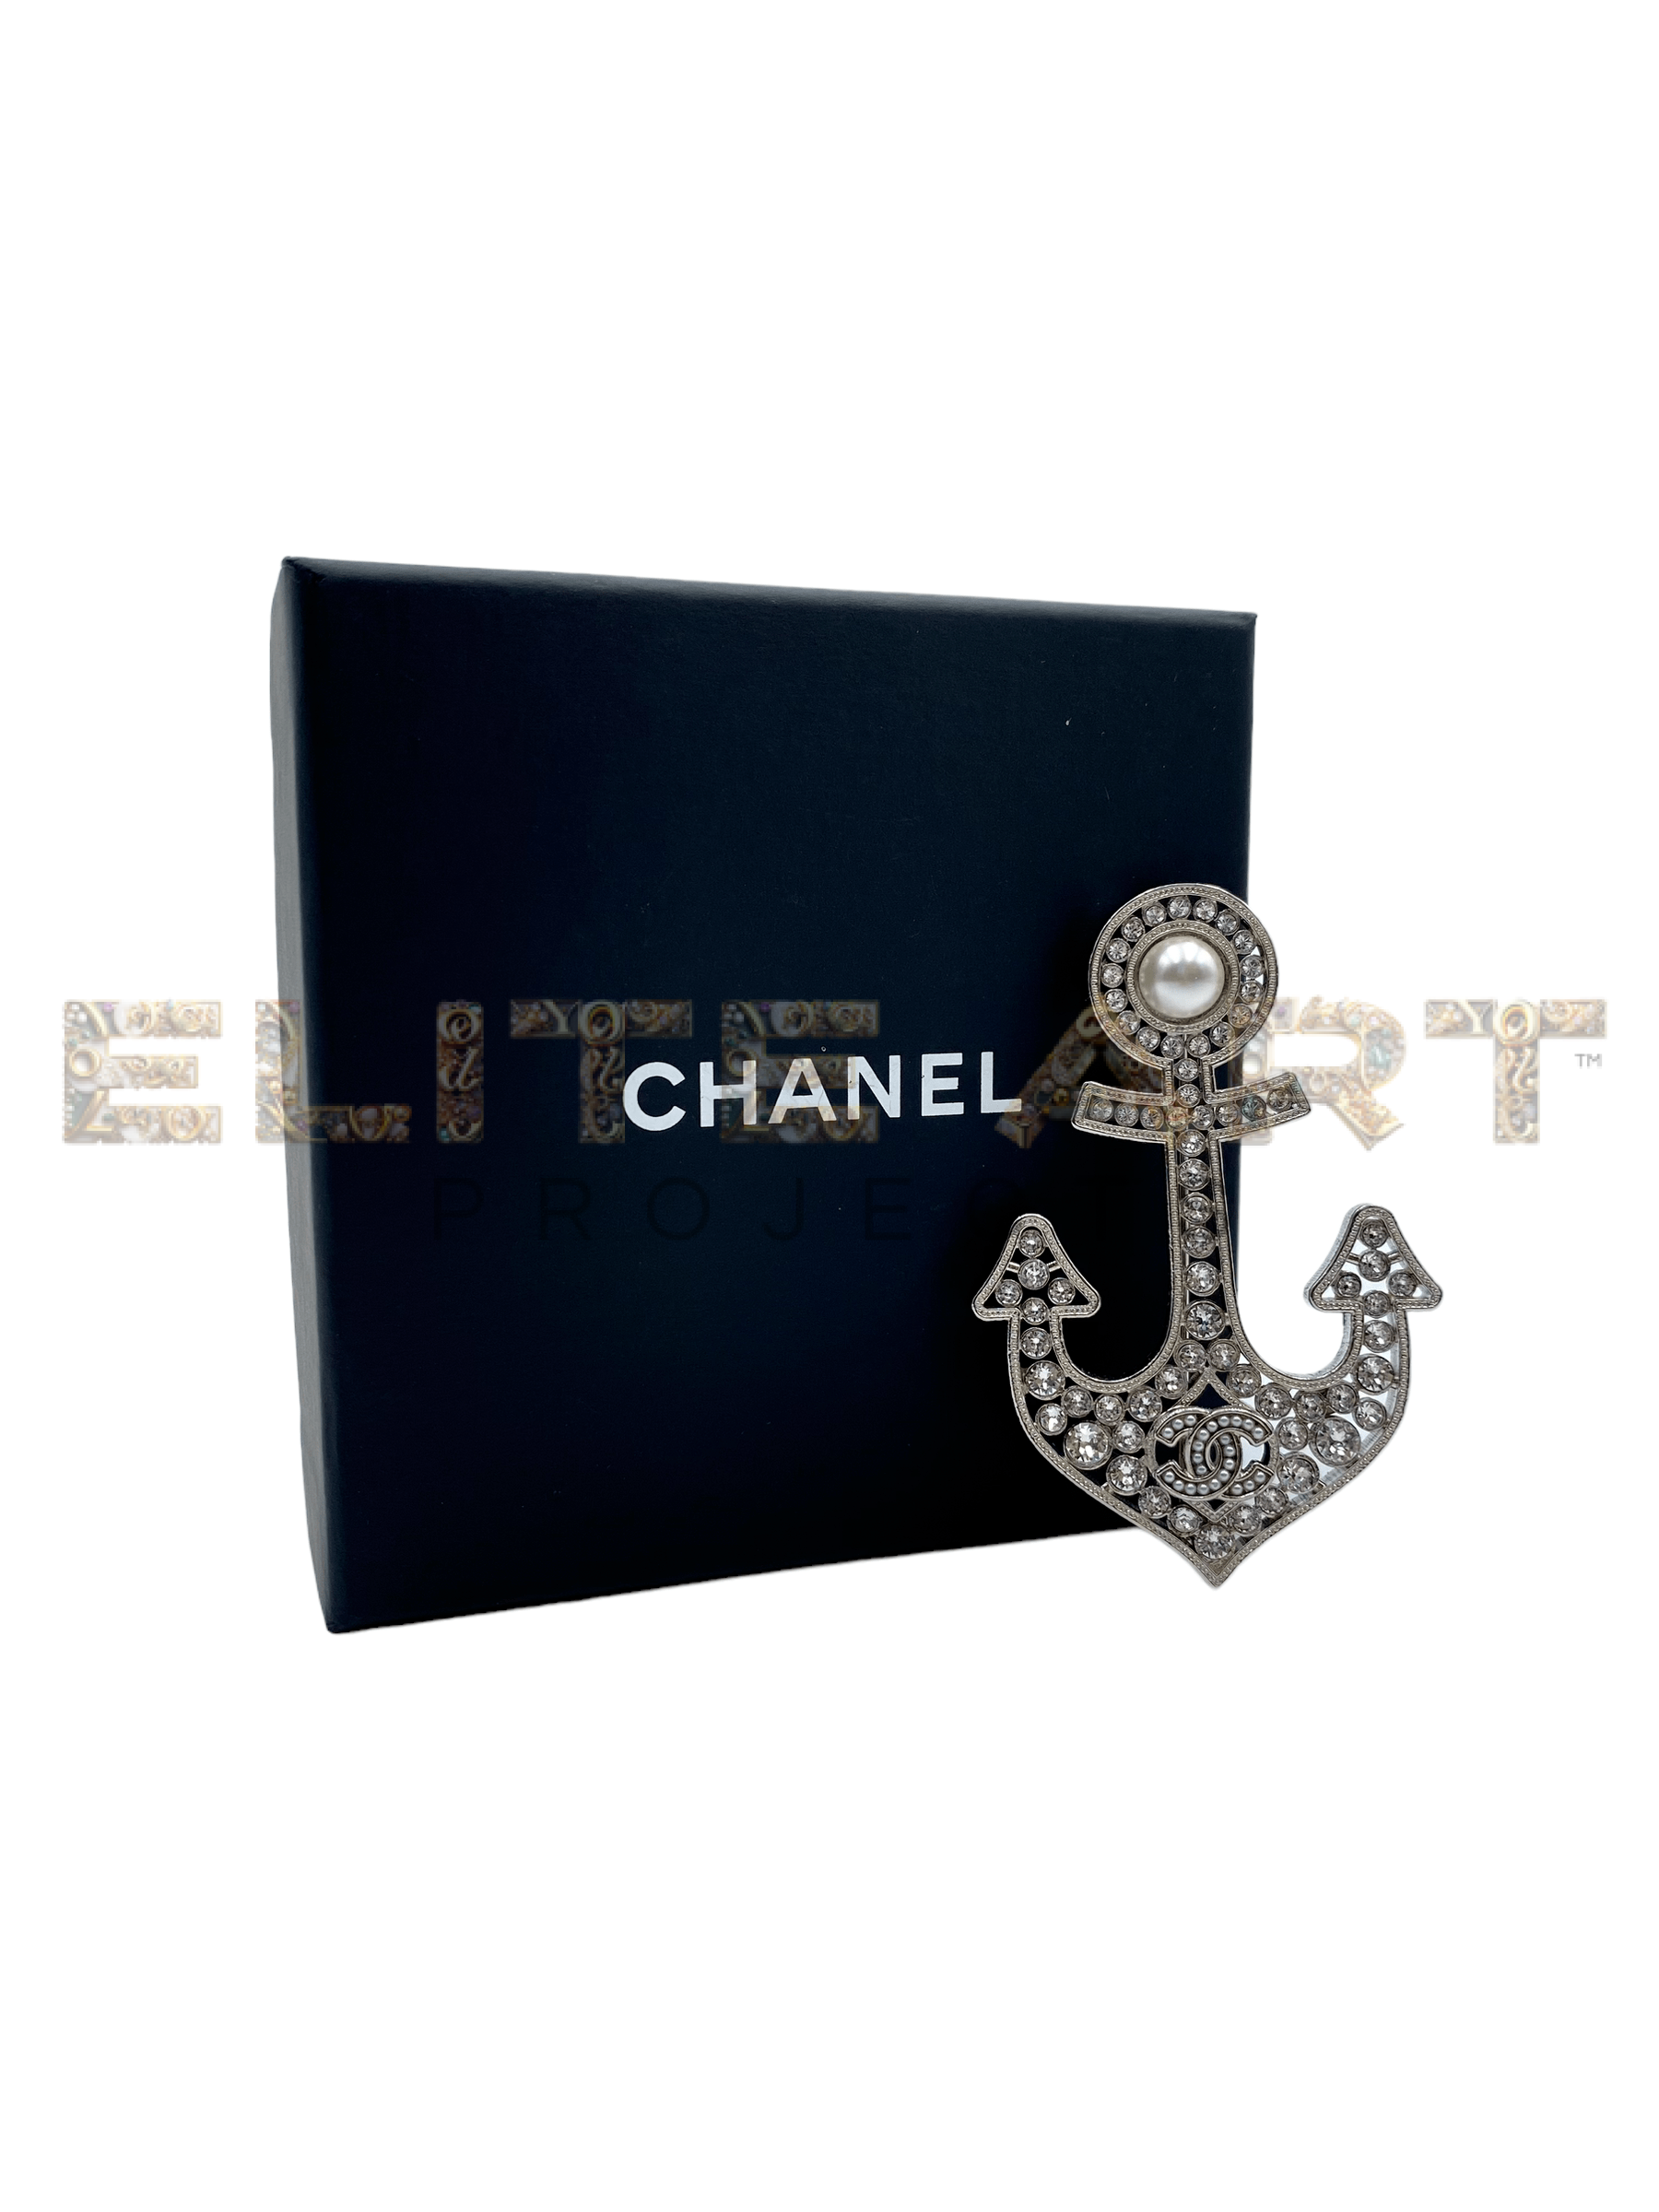 ELS Fashion TV,Elite Art Projects,Chanel,Anchor brooch,silver-tone hardware,sparkling diamonds,white pearl,Chanel box